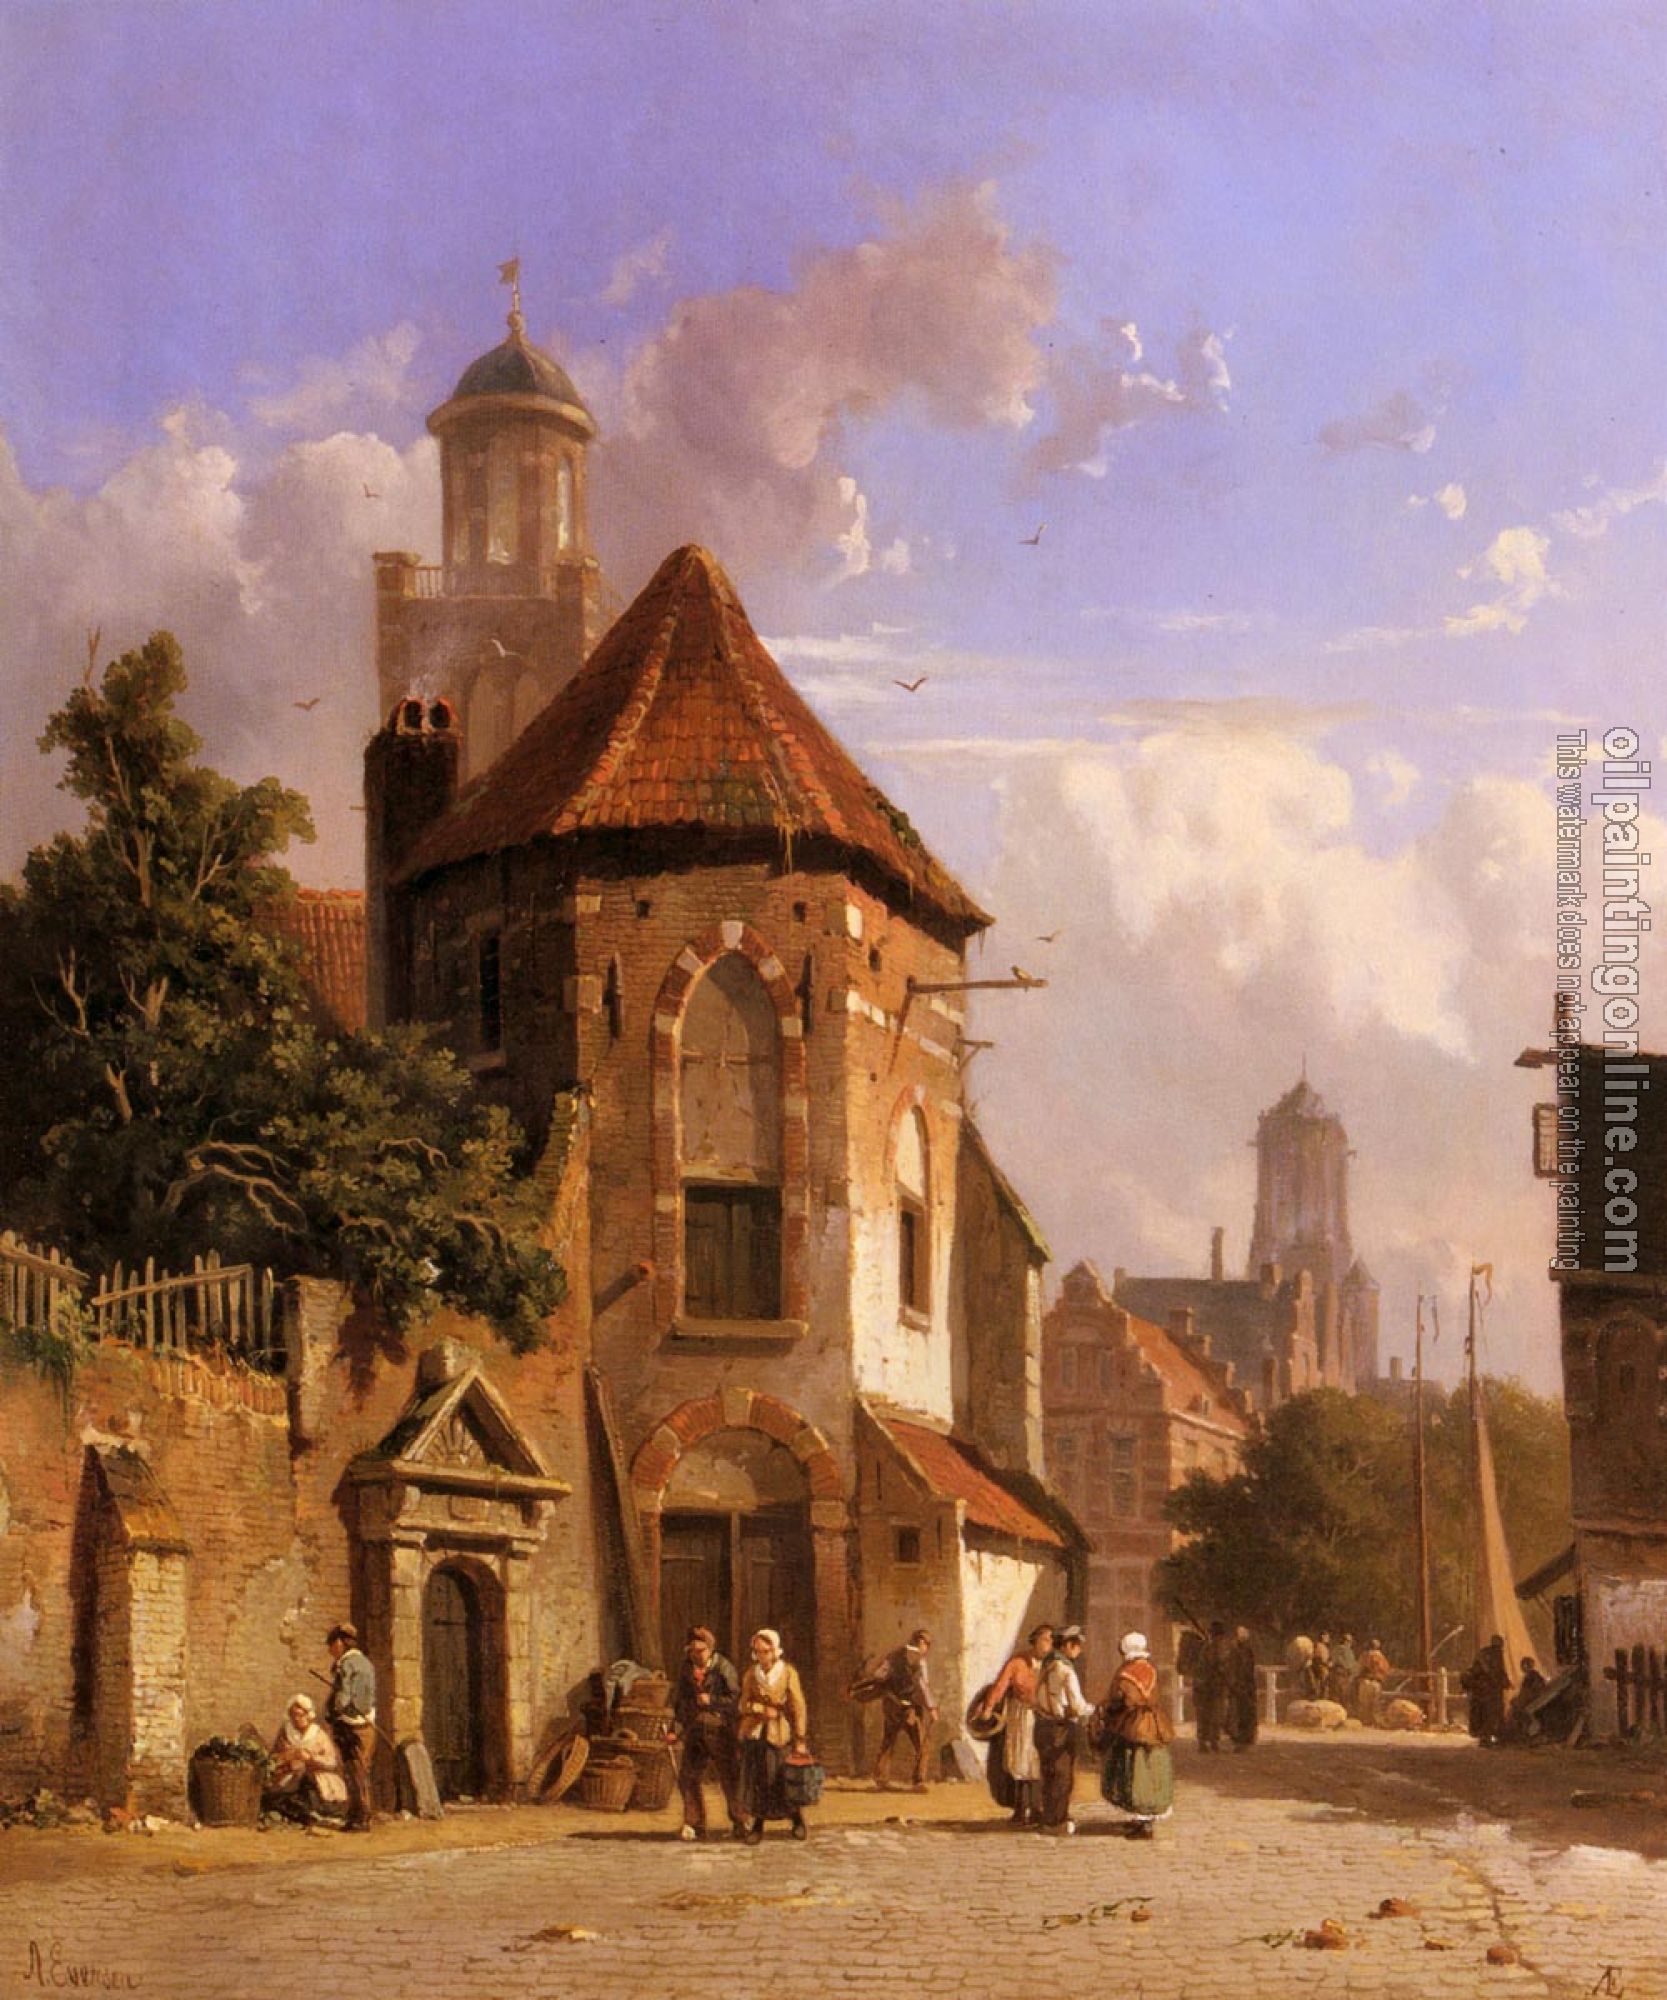 Eversen, Adrianus - View Of A Dutch Street